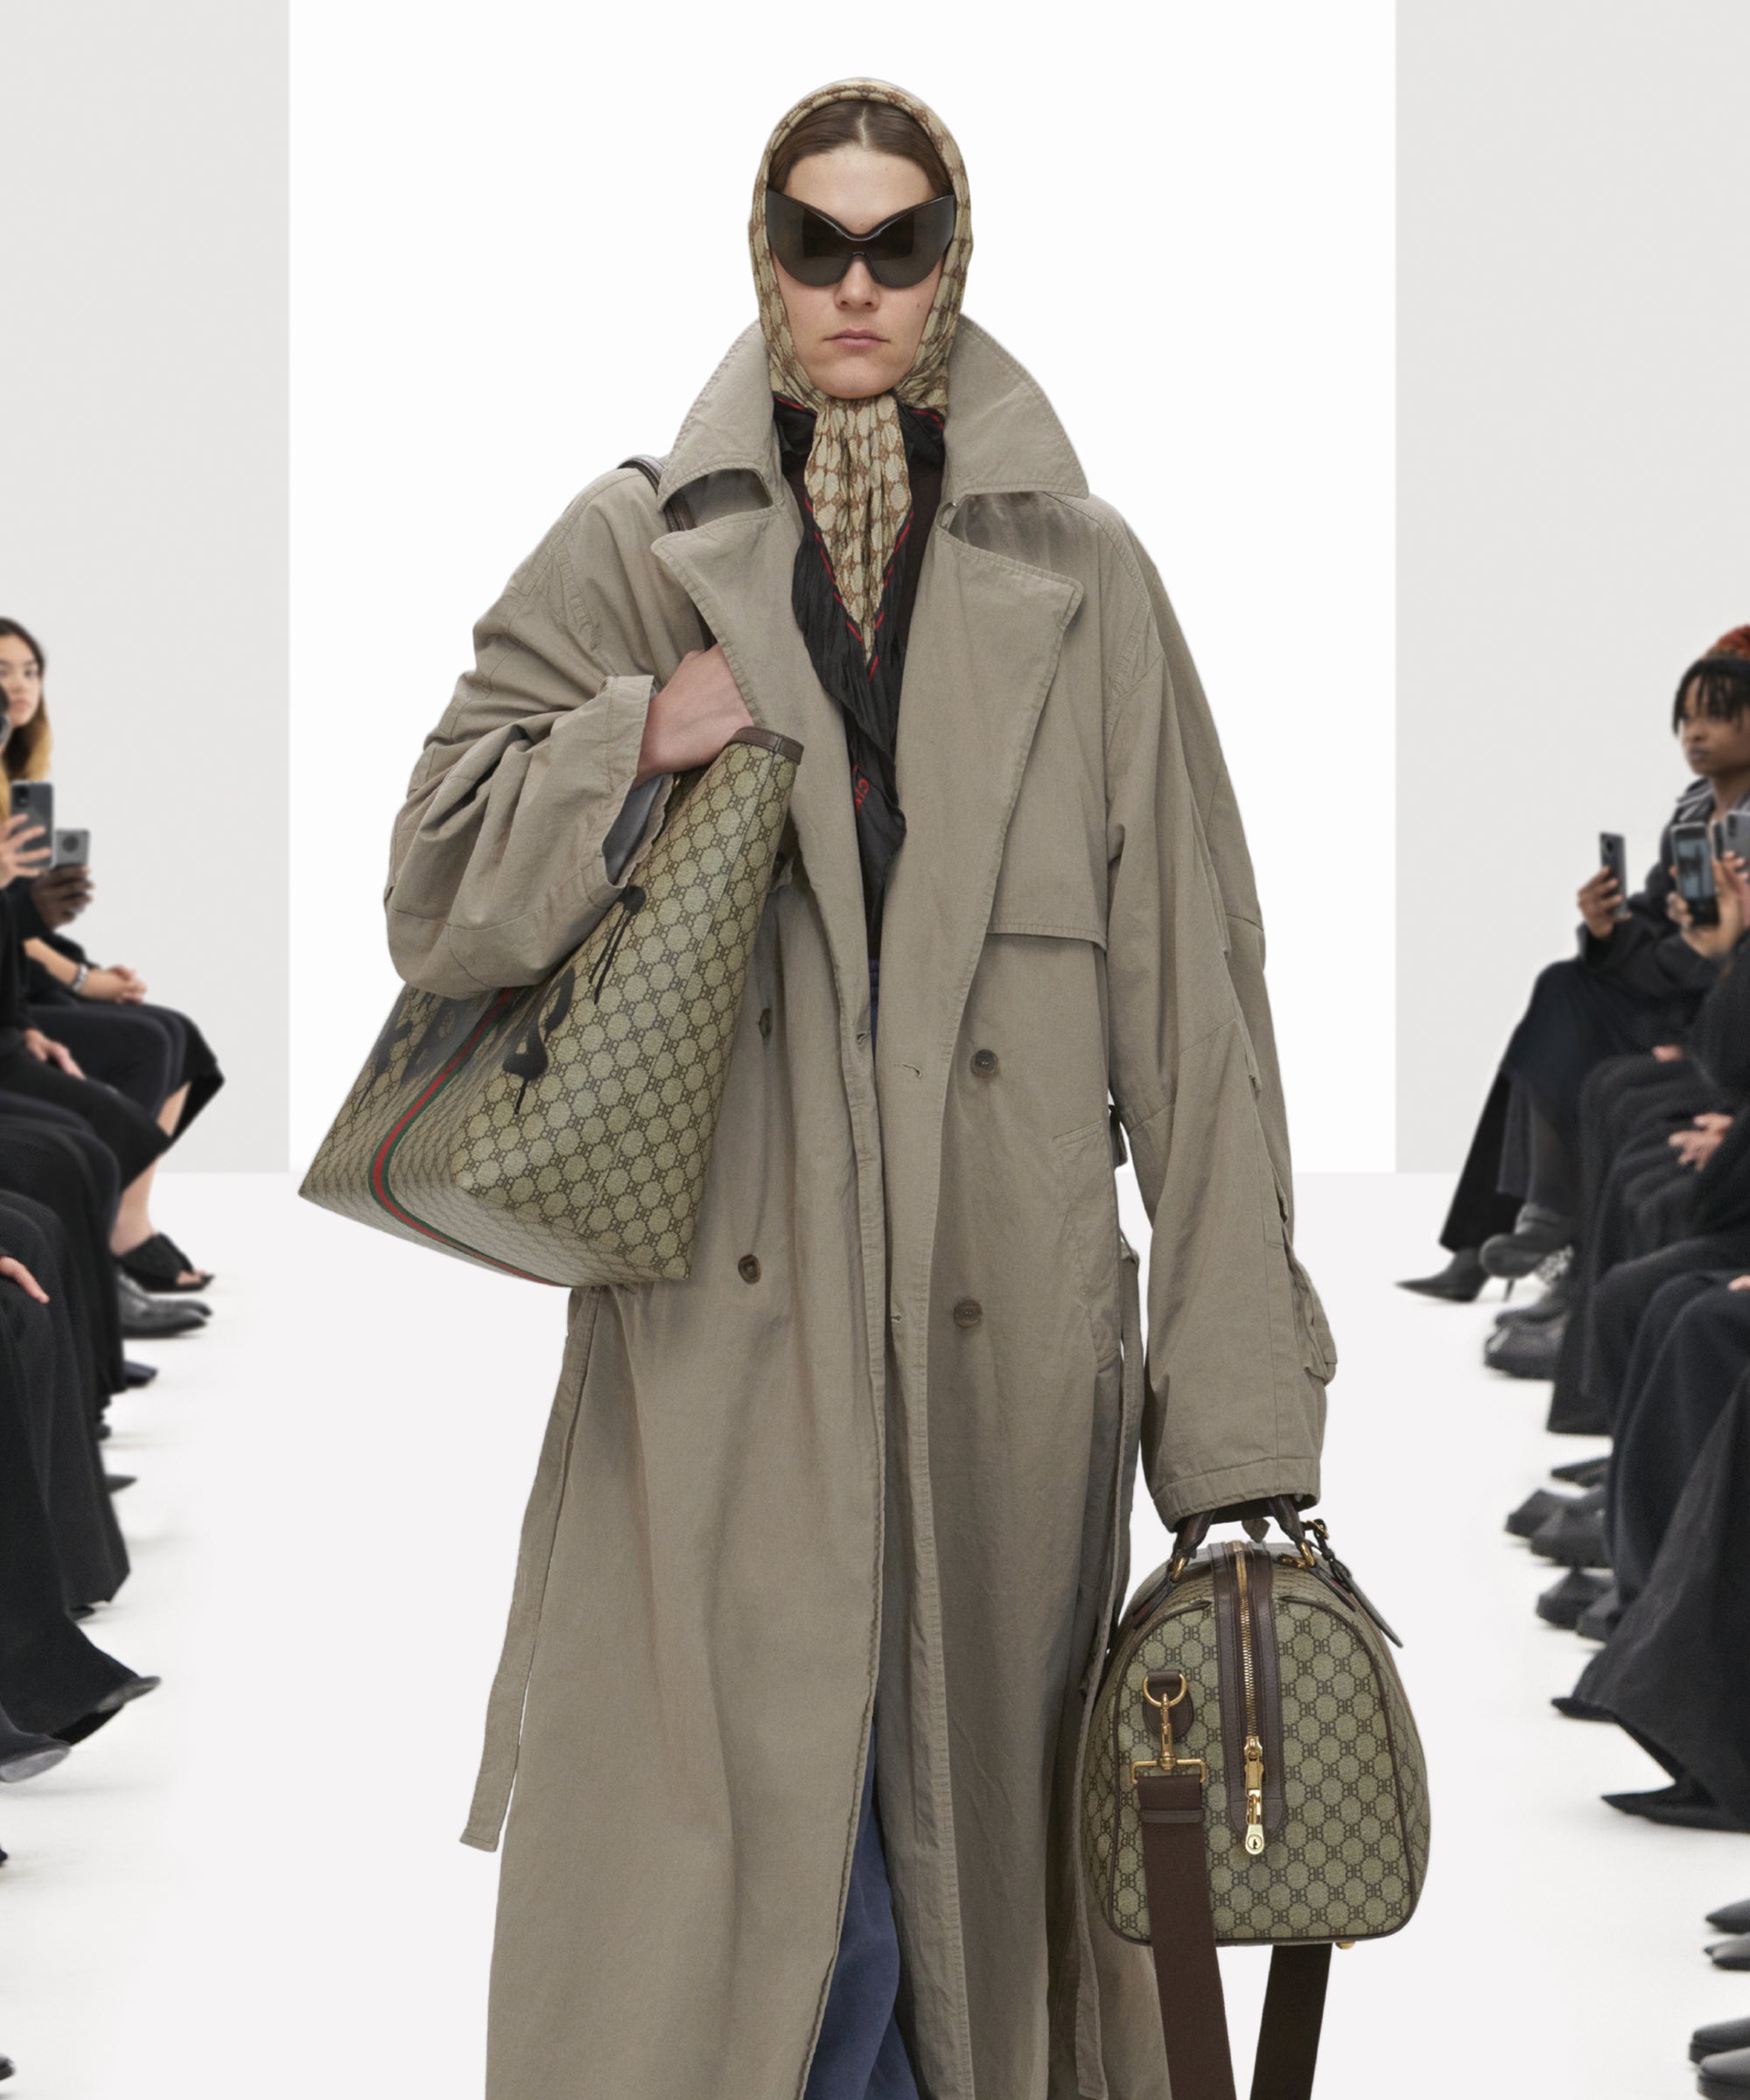 Balenciaga Spring 2022 Show Included Gucci Bags & Crocs